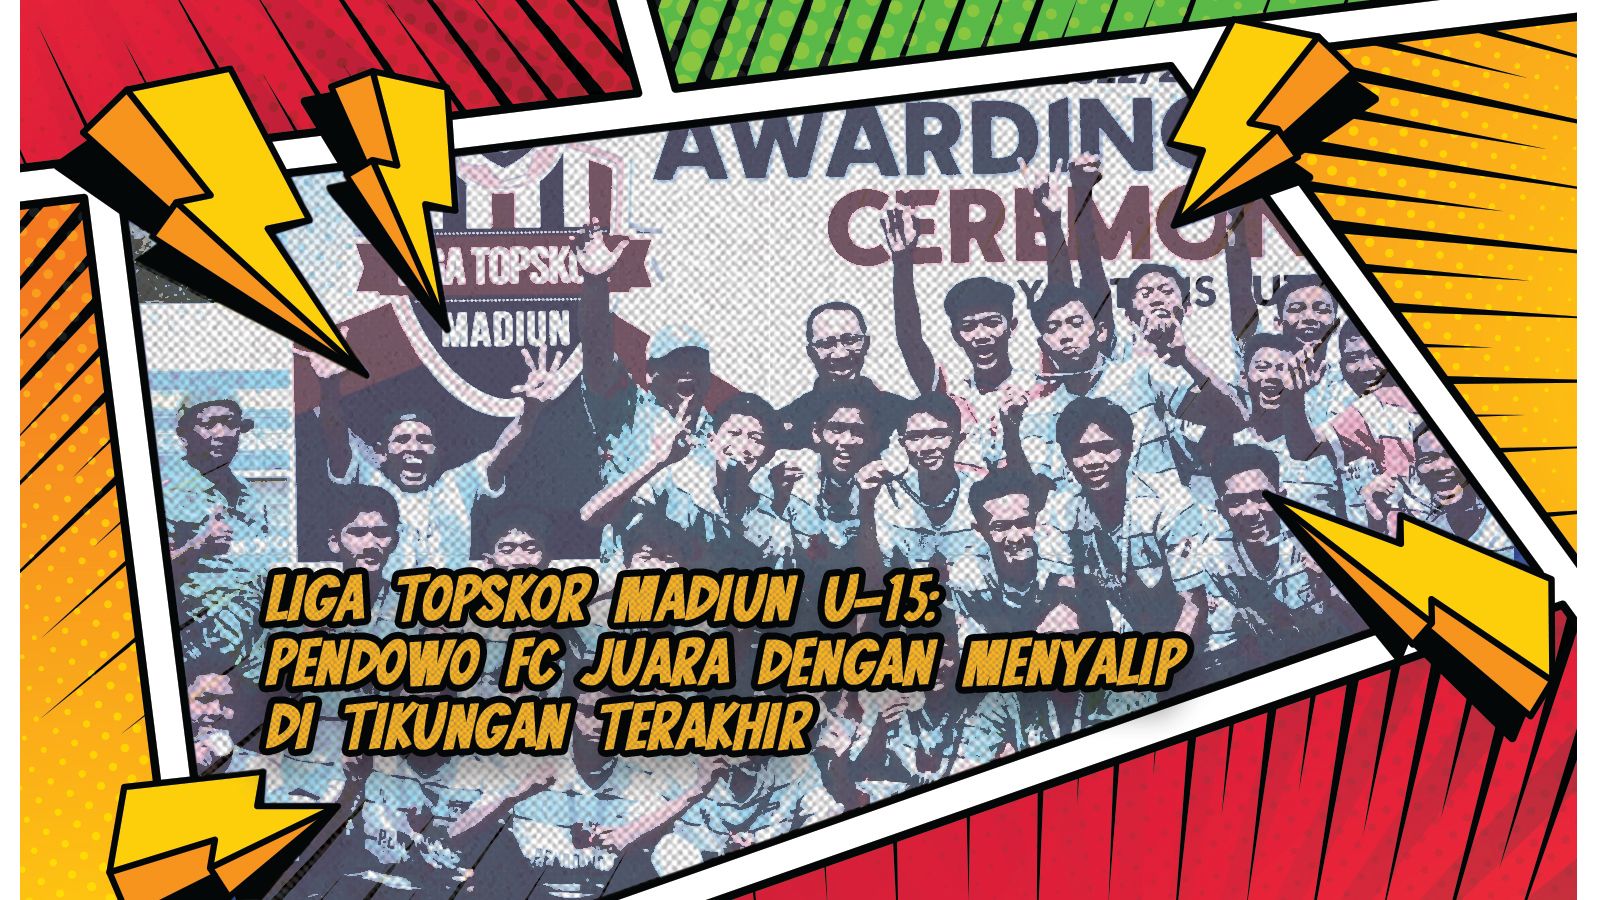 Pendowo FC Juara Liga TopSkor Madiun U-15 2022-2023. (Wiryanto/Liga TopSkor)